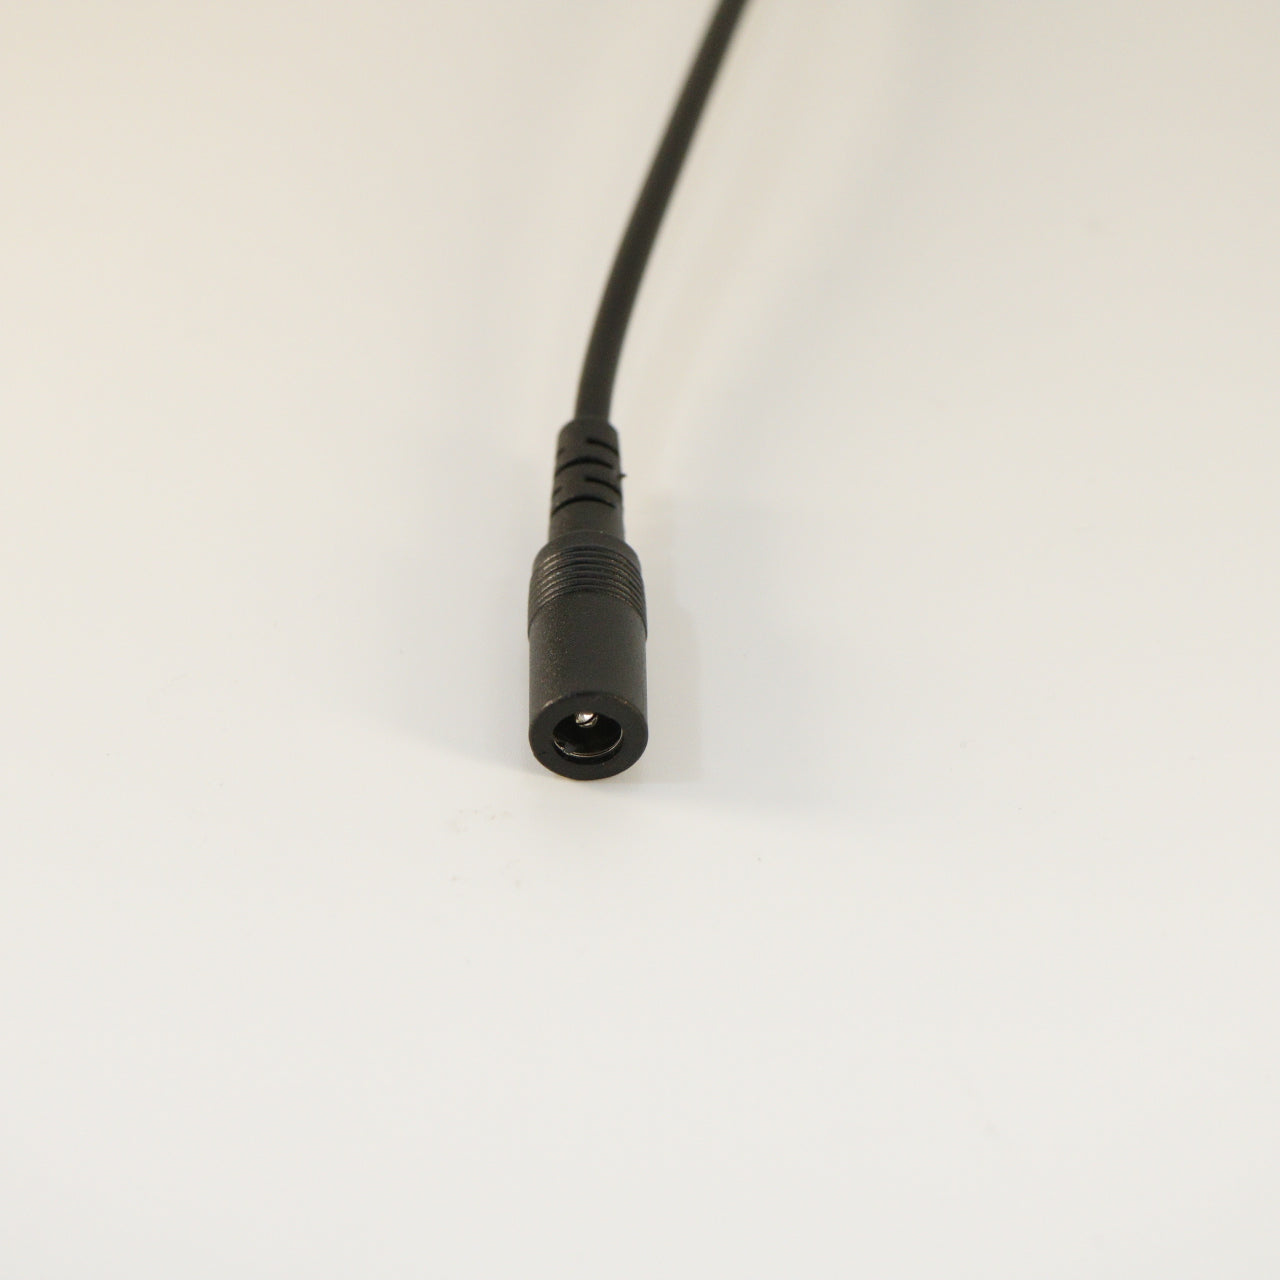 Voedingskabel - 9 volt batterij clip naar voeding plug (2.1mm)